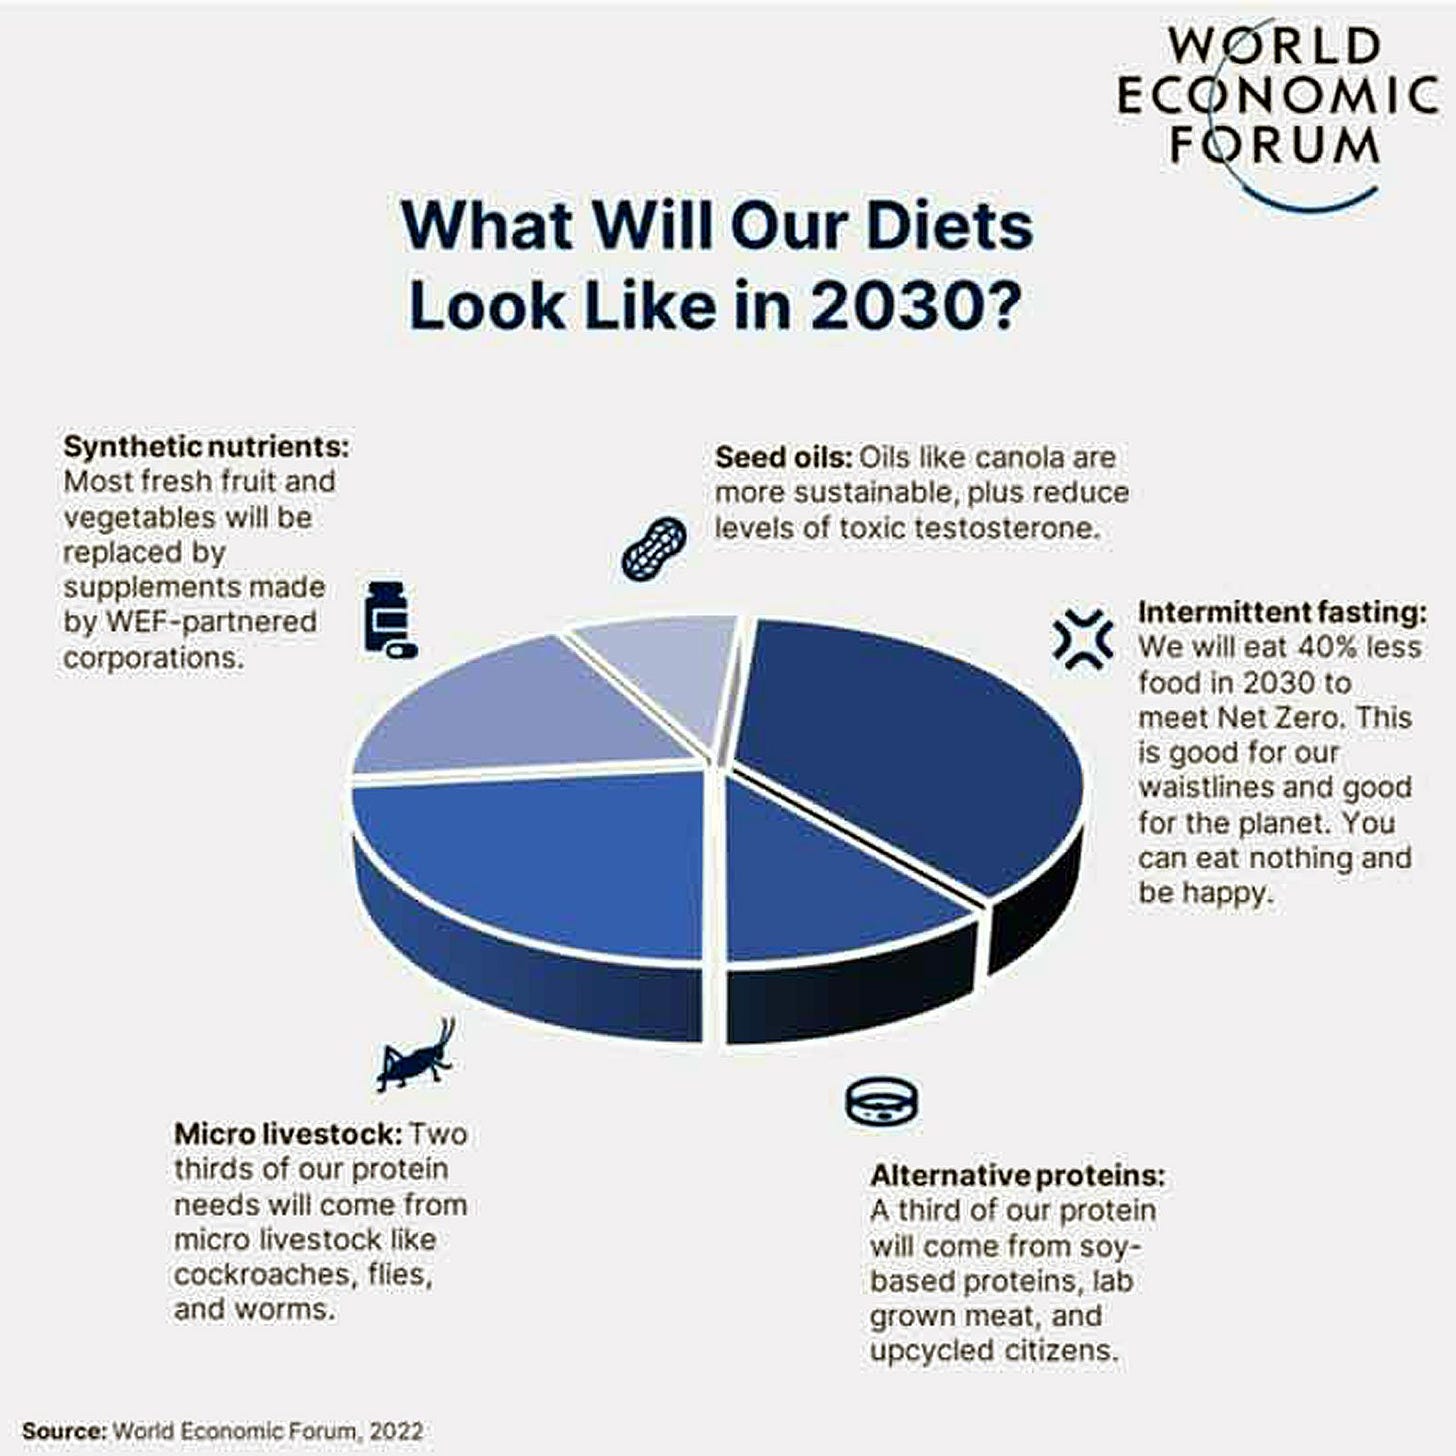 world economic forum diets 2030